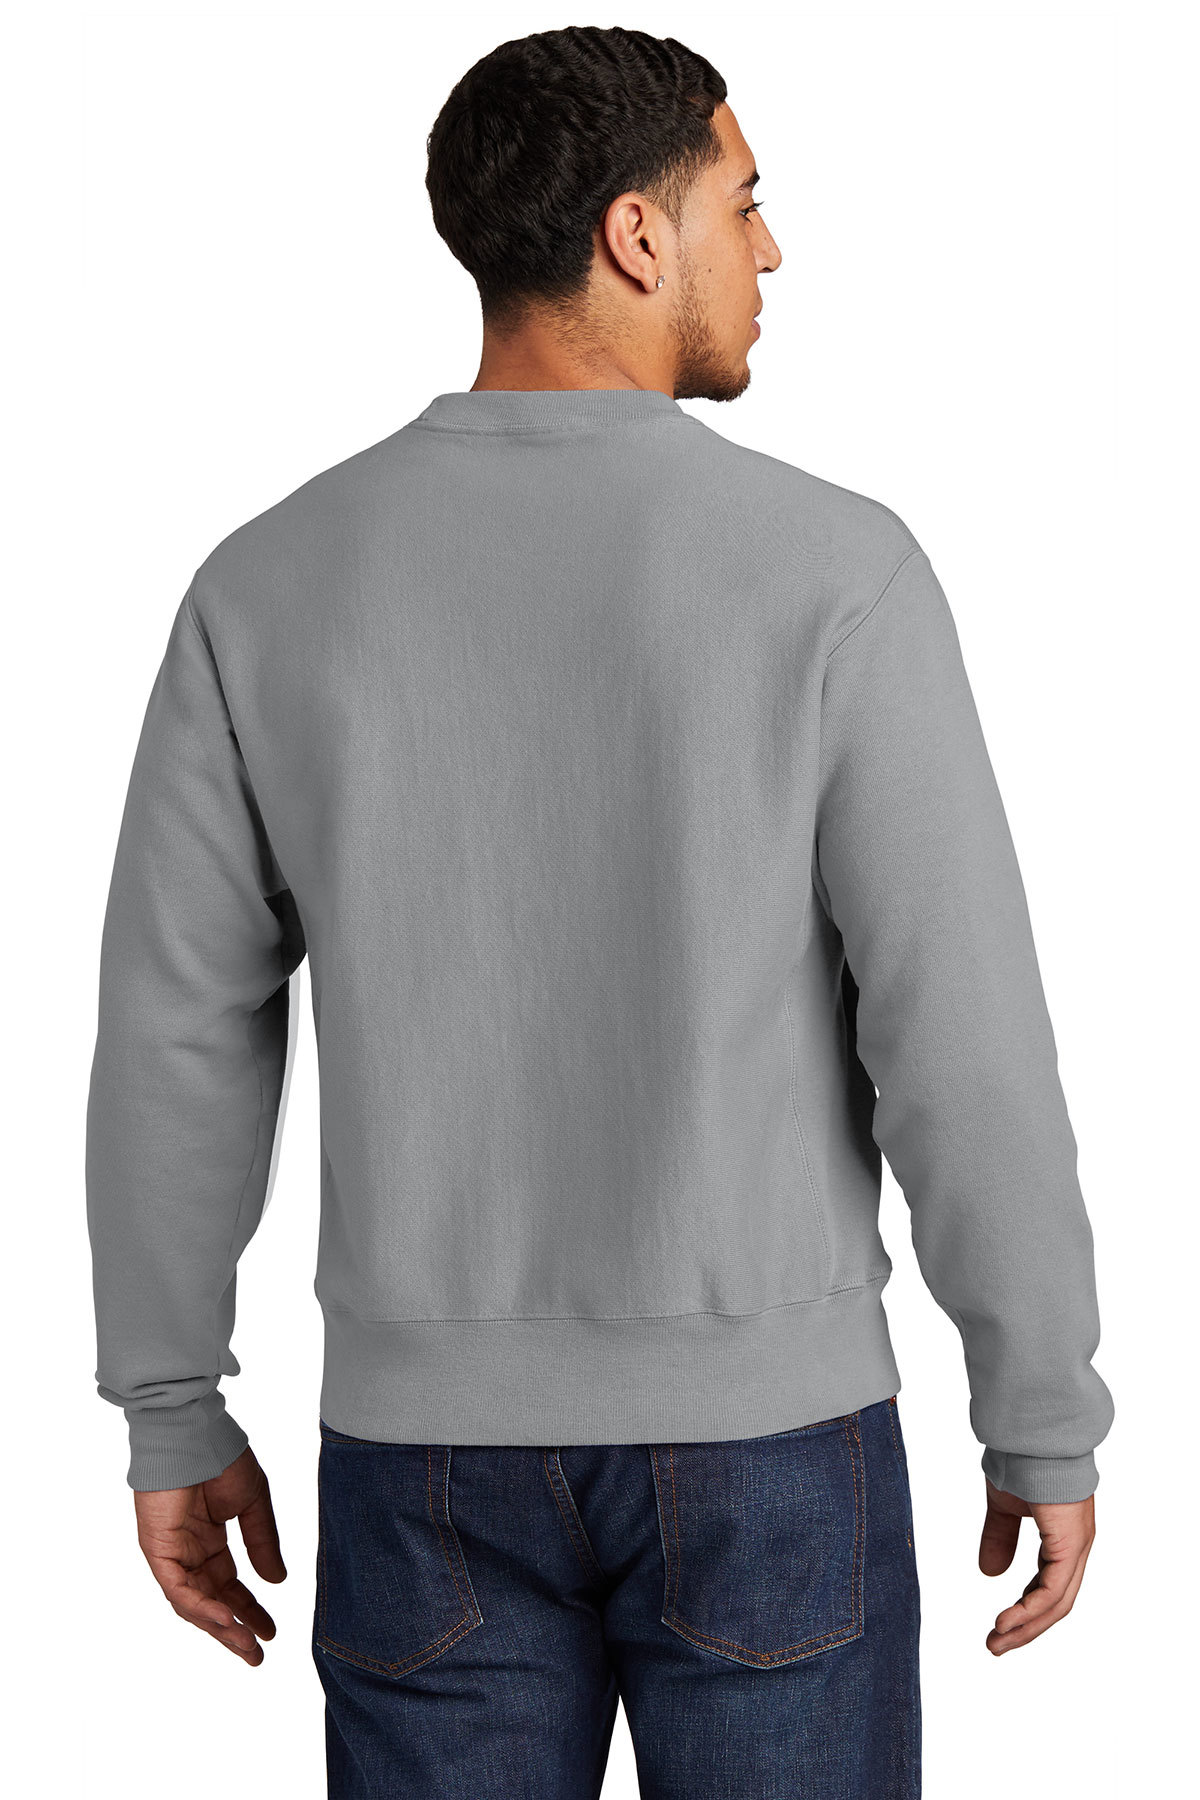 Champion Reverse Weave Garment-Dyed Hooded Sweatshirt.